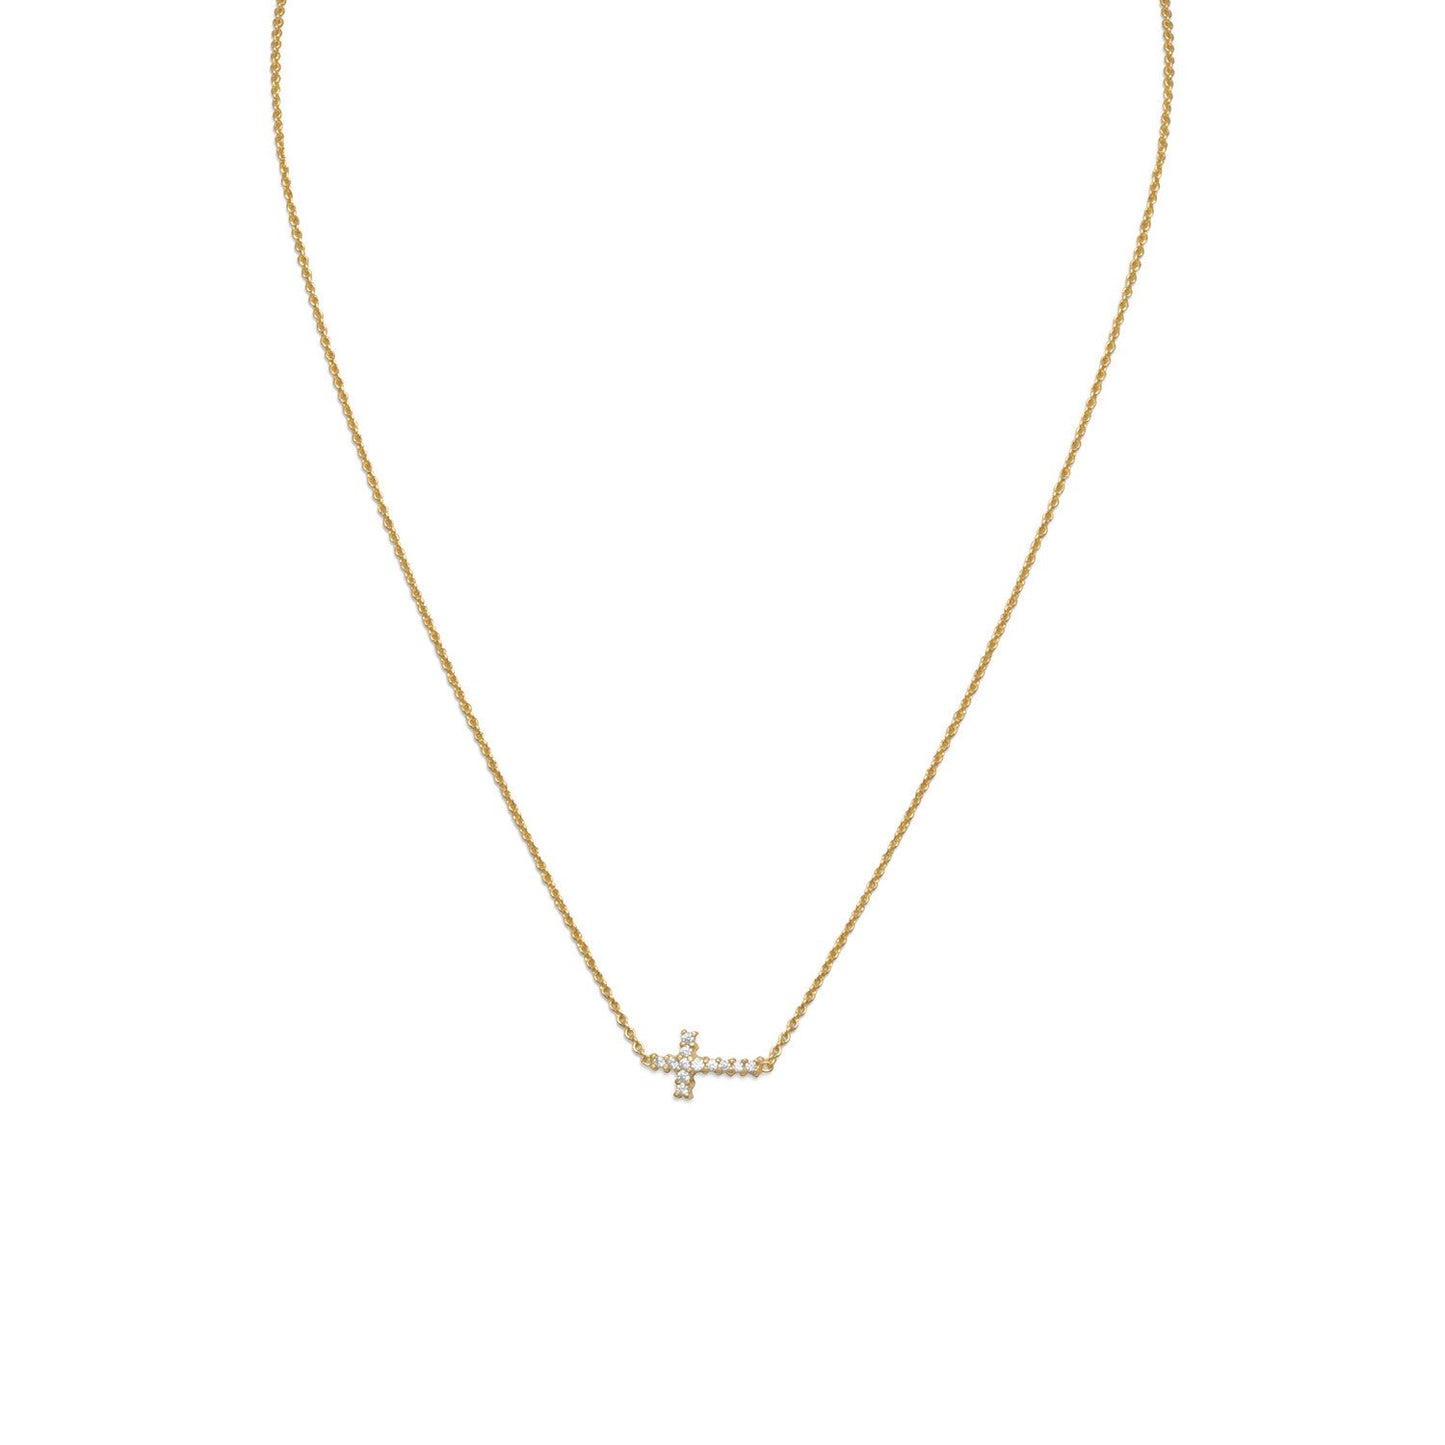 16" 14 Karat Gold Plated Necklace with Sideways CZ Cross